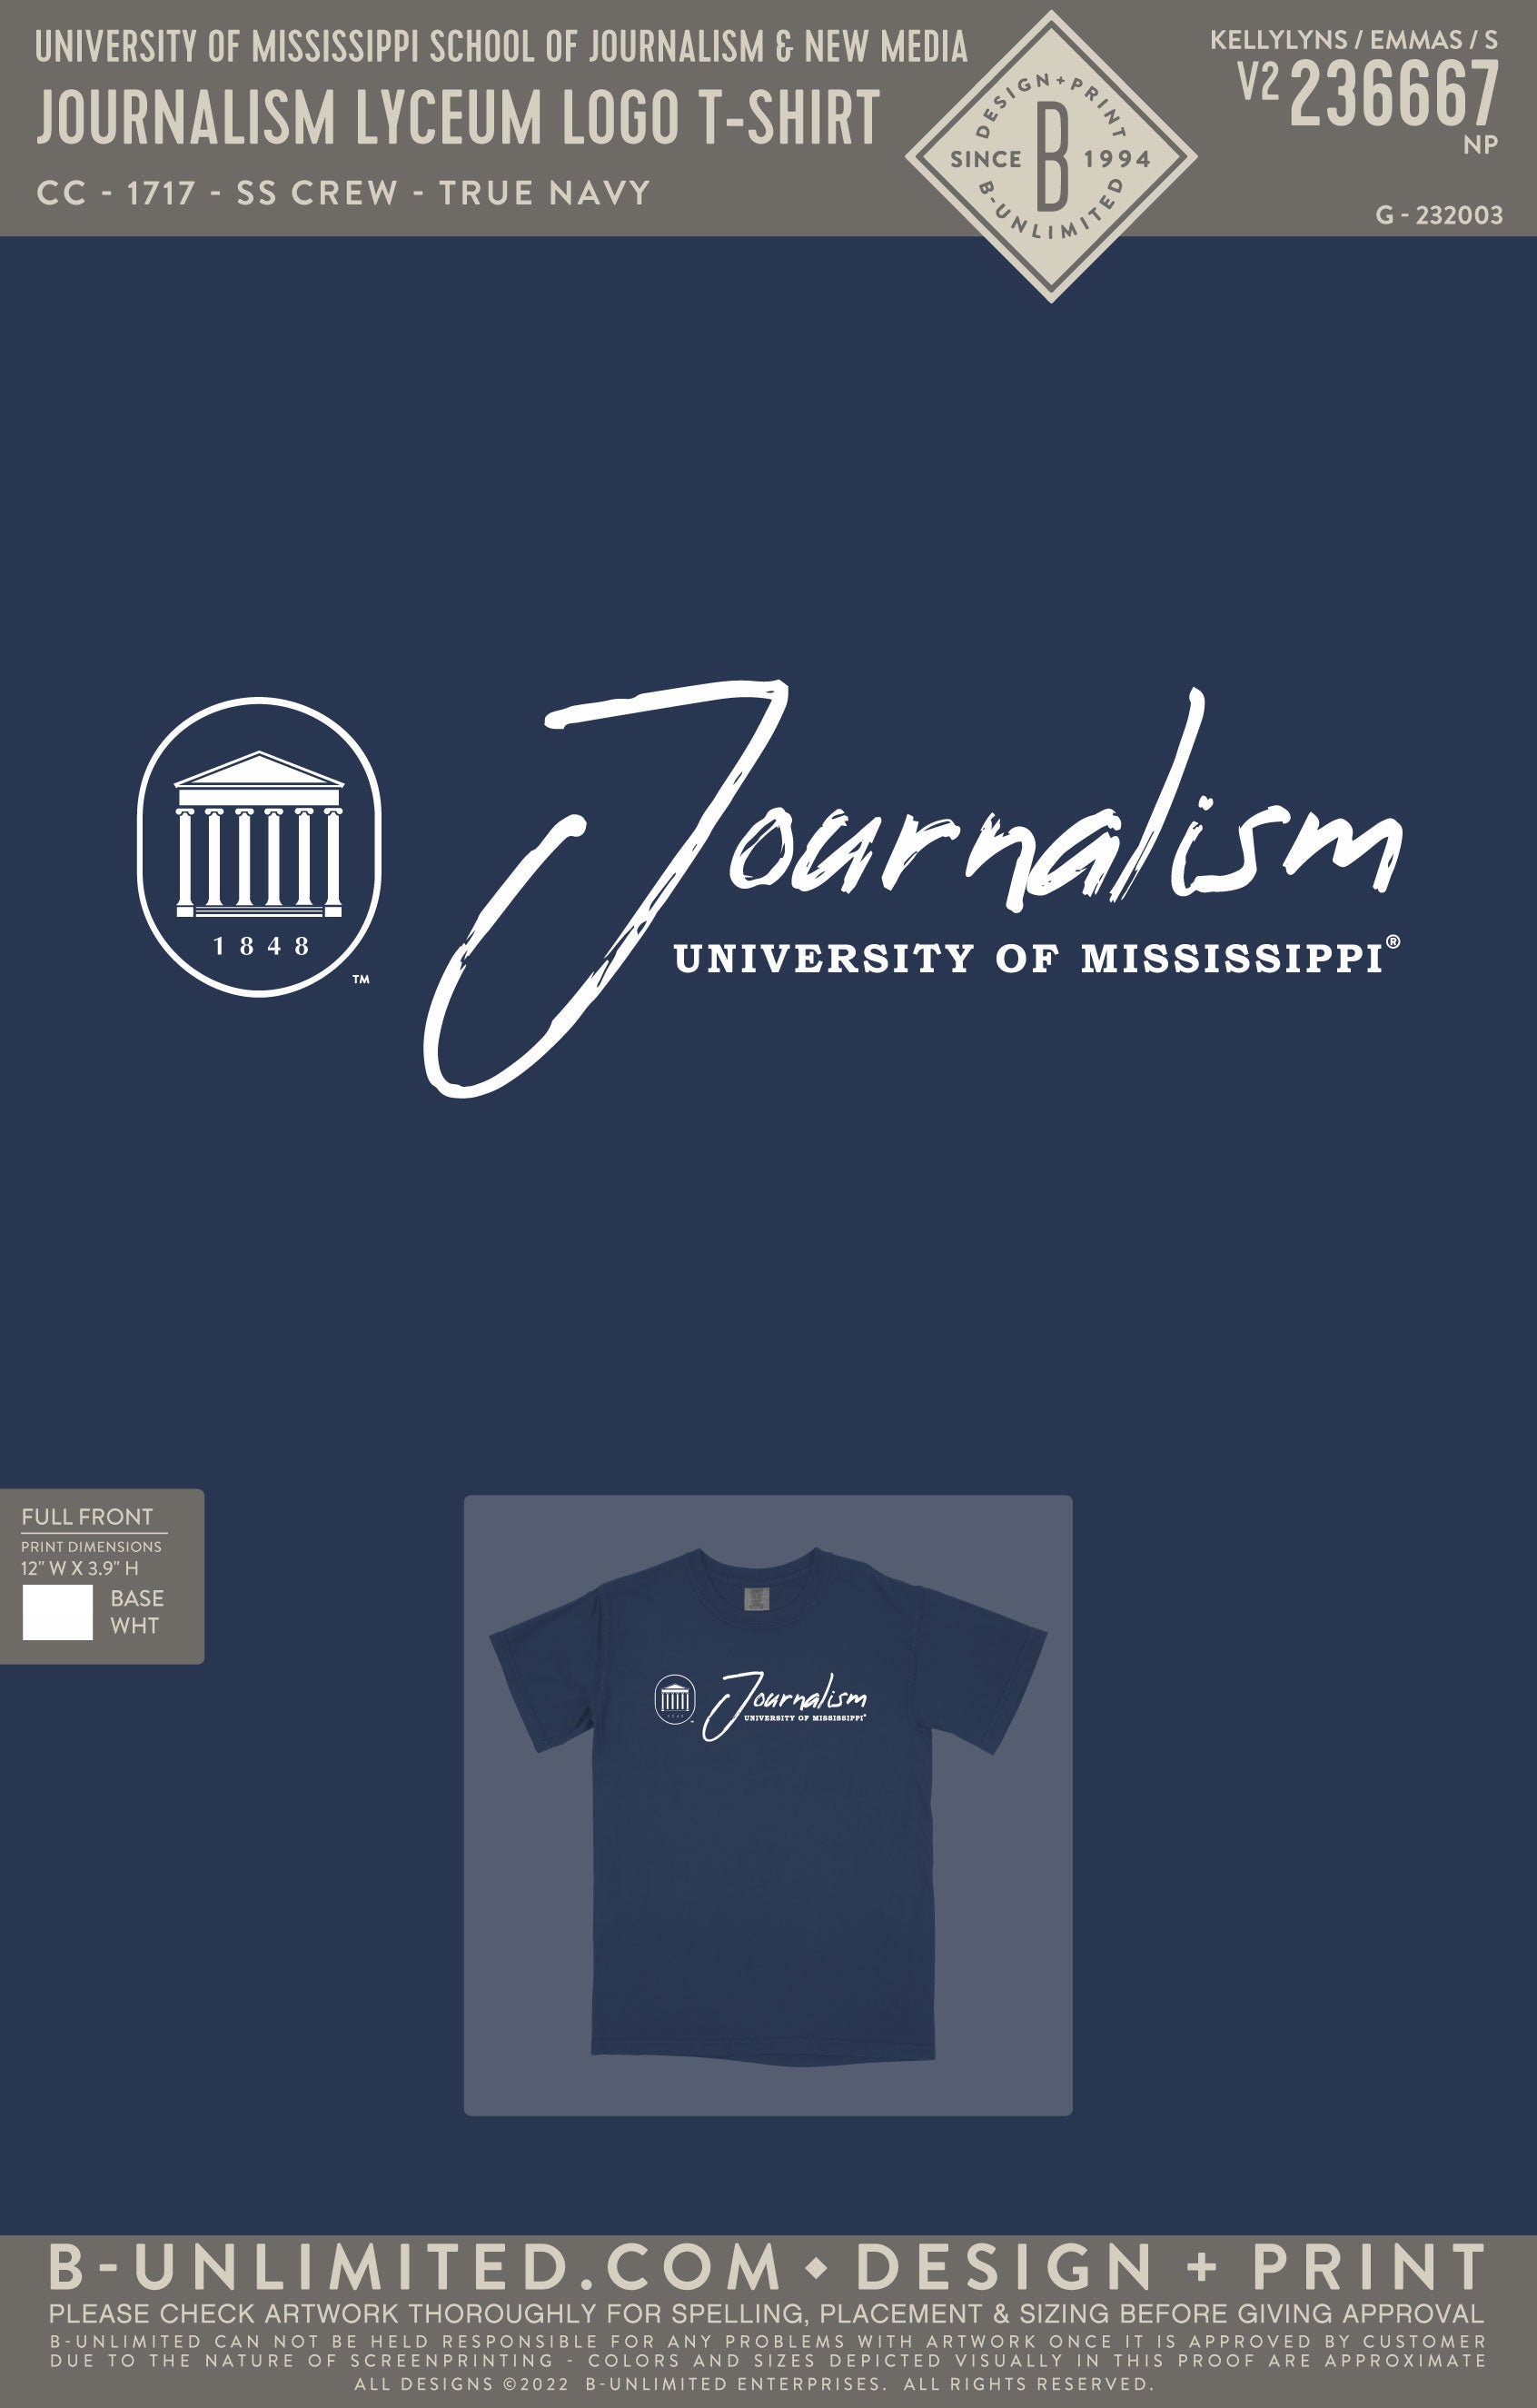 University of Mississippi School of Journalism & New Media - Journalism Lyceum Logo T-Shirt - CC - 1717 - SS Crew - True Navy